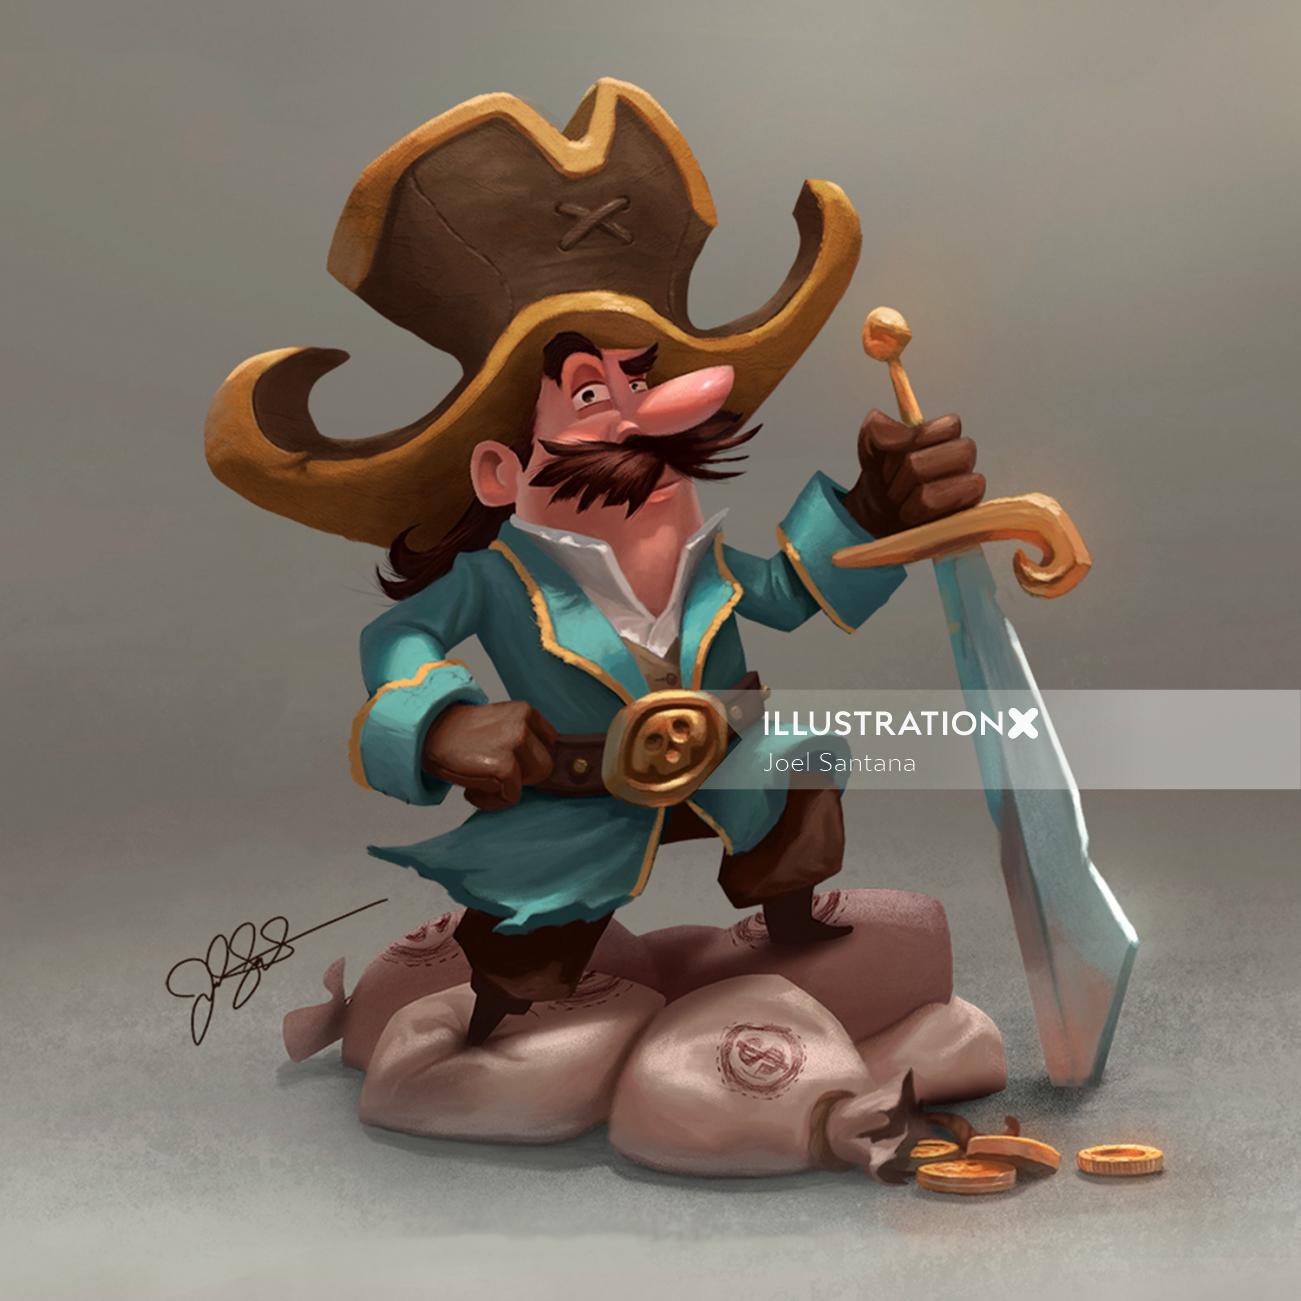 Pirate character design by Joel Santana